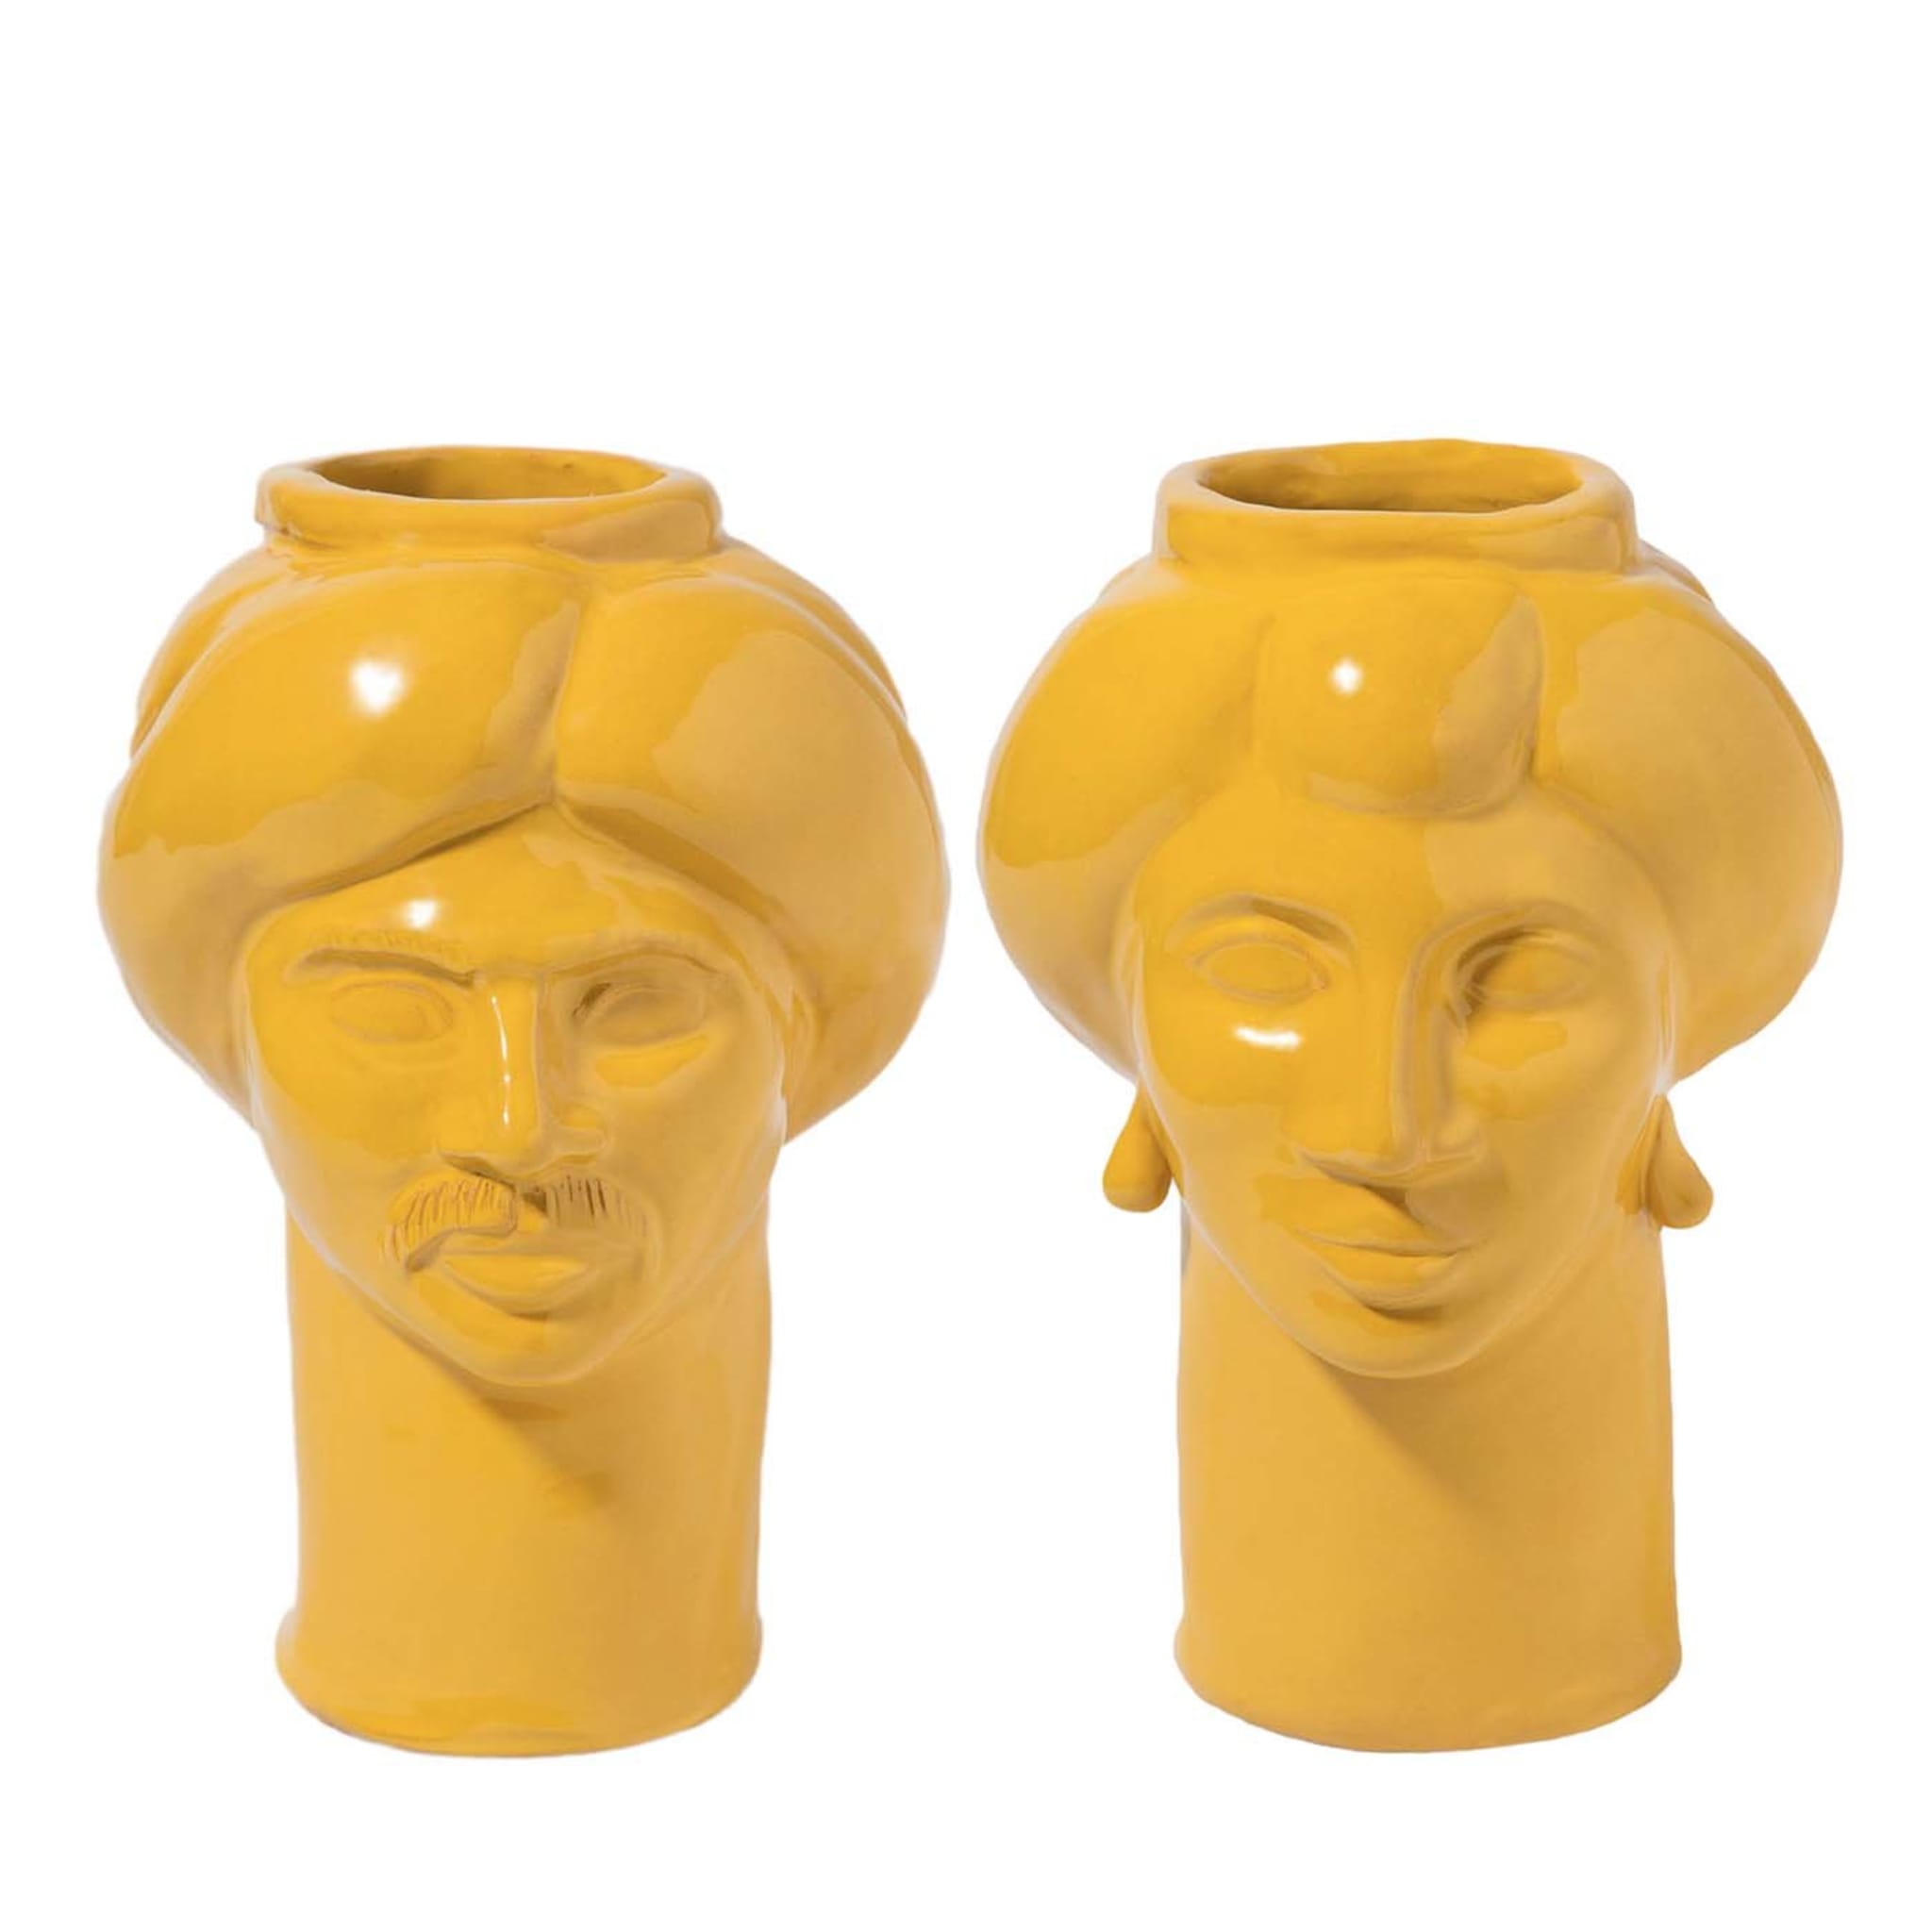 Solimano & Roxelana Yellow Vases - Main view